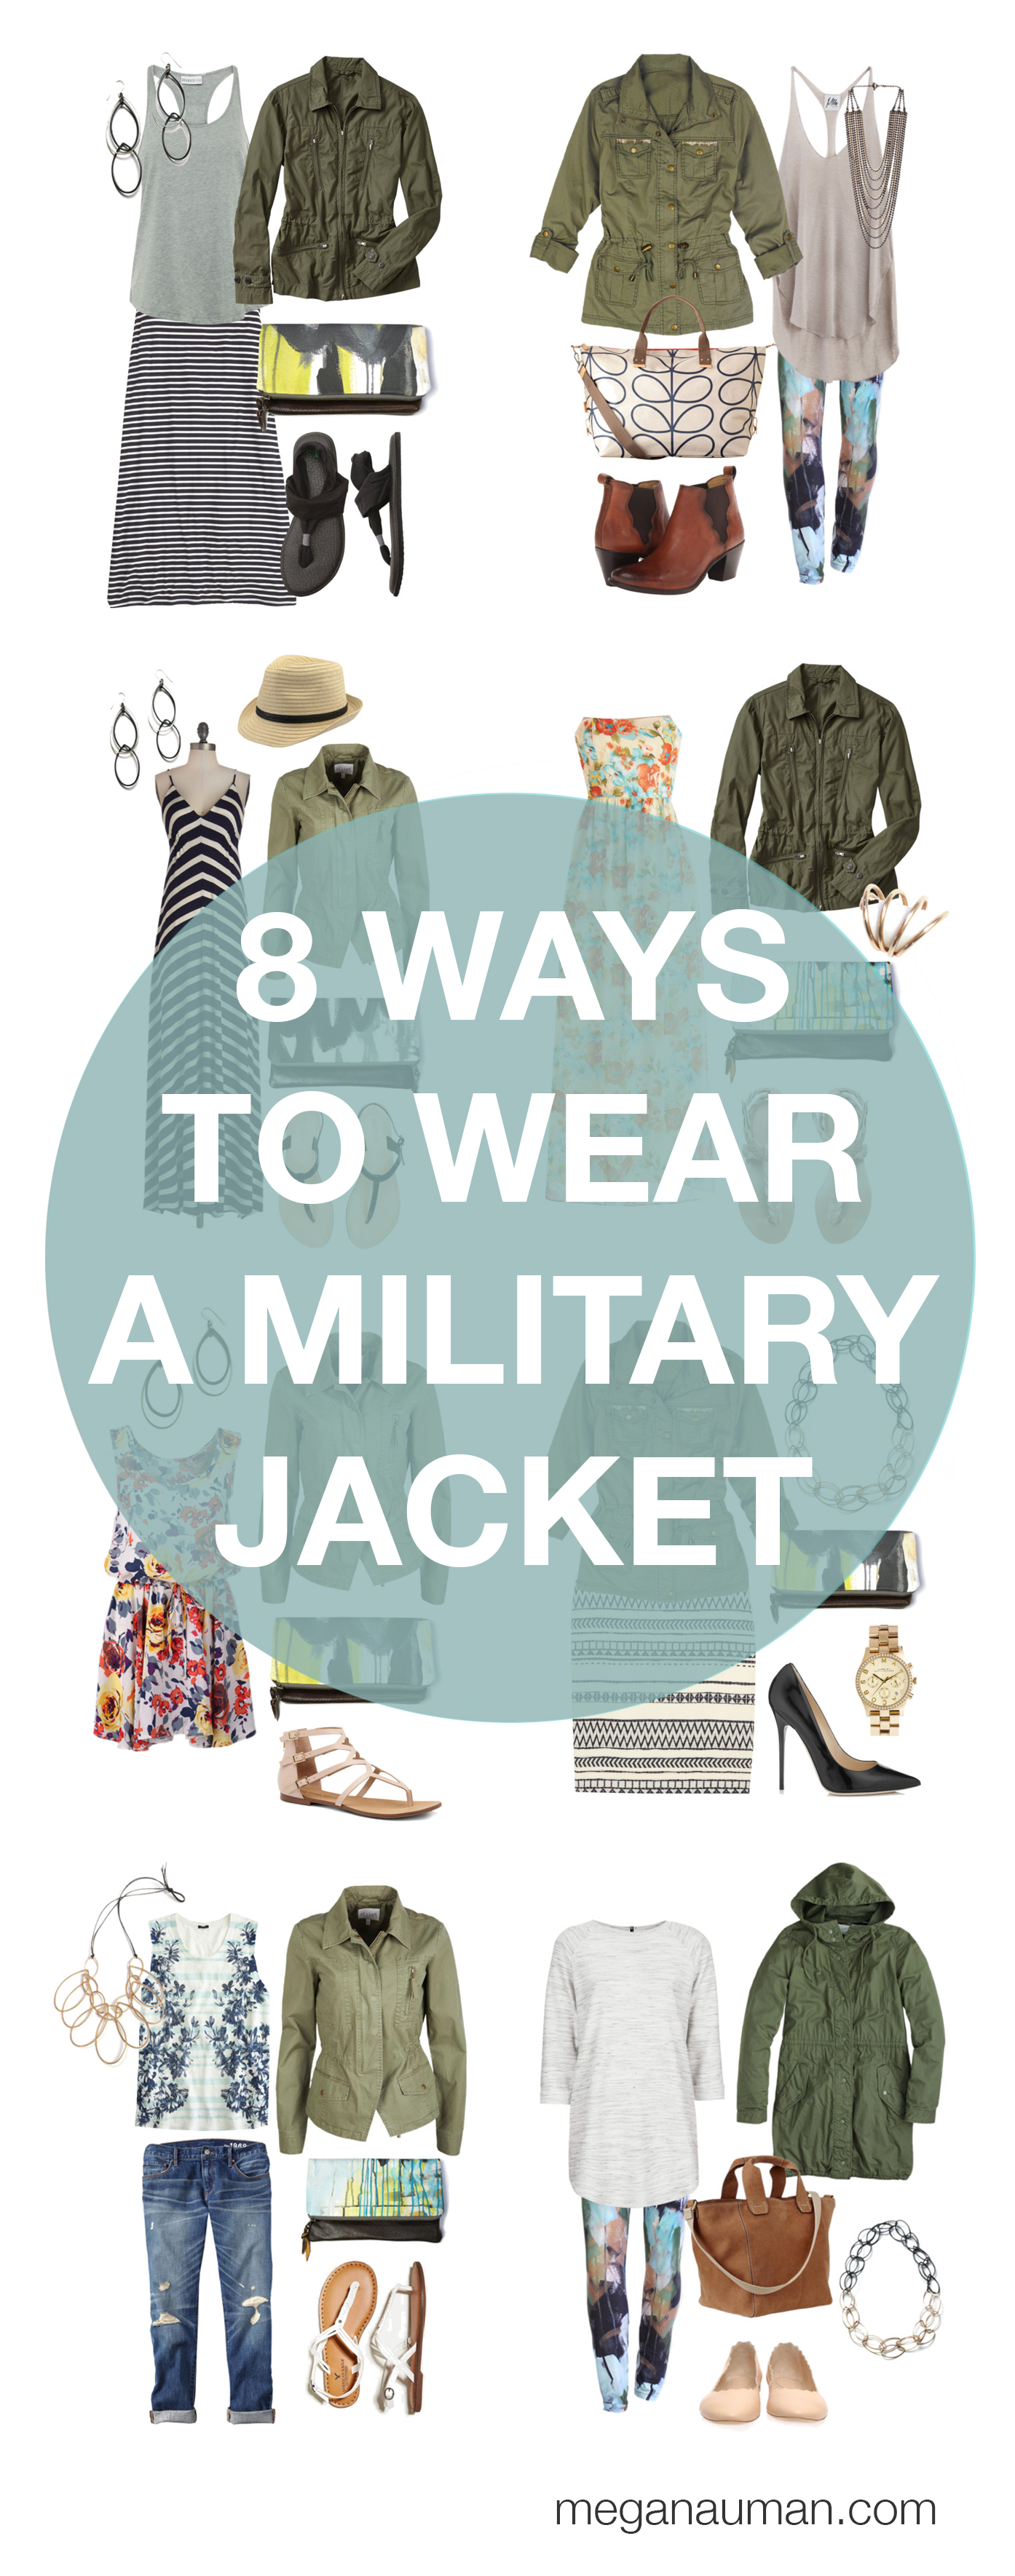 how to wear a military jacket - 8 ways to style your military jacket via megan auman